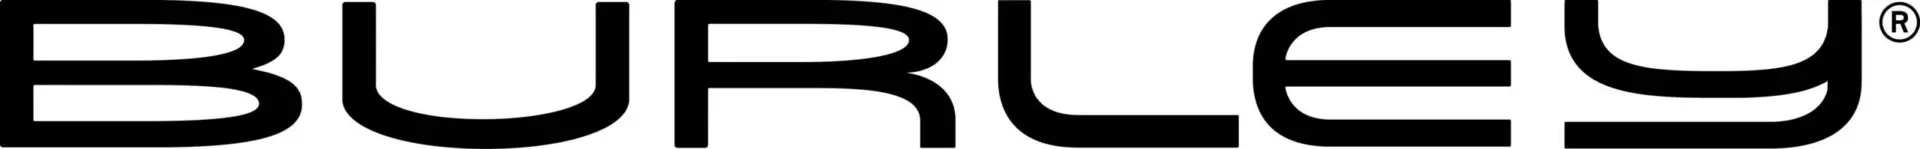 logo burley